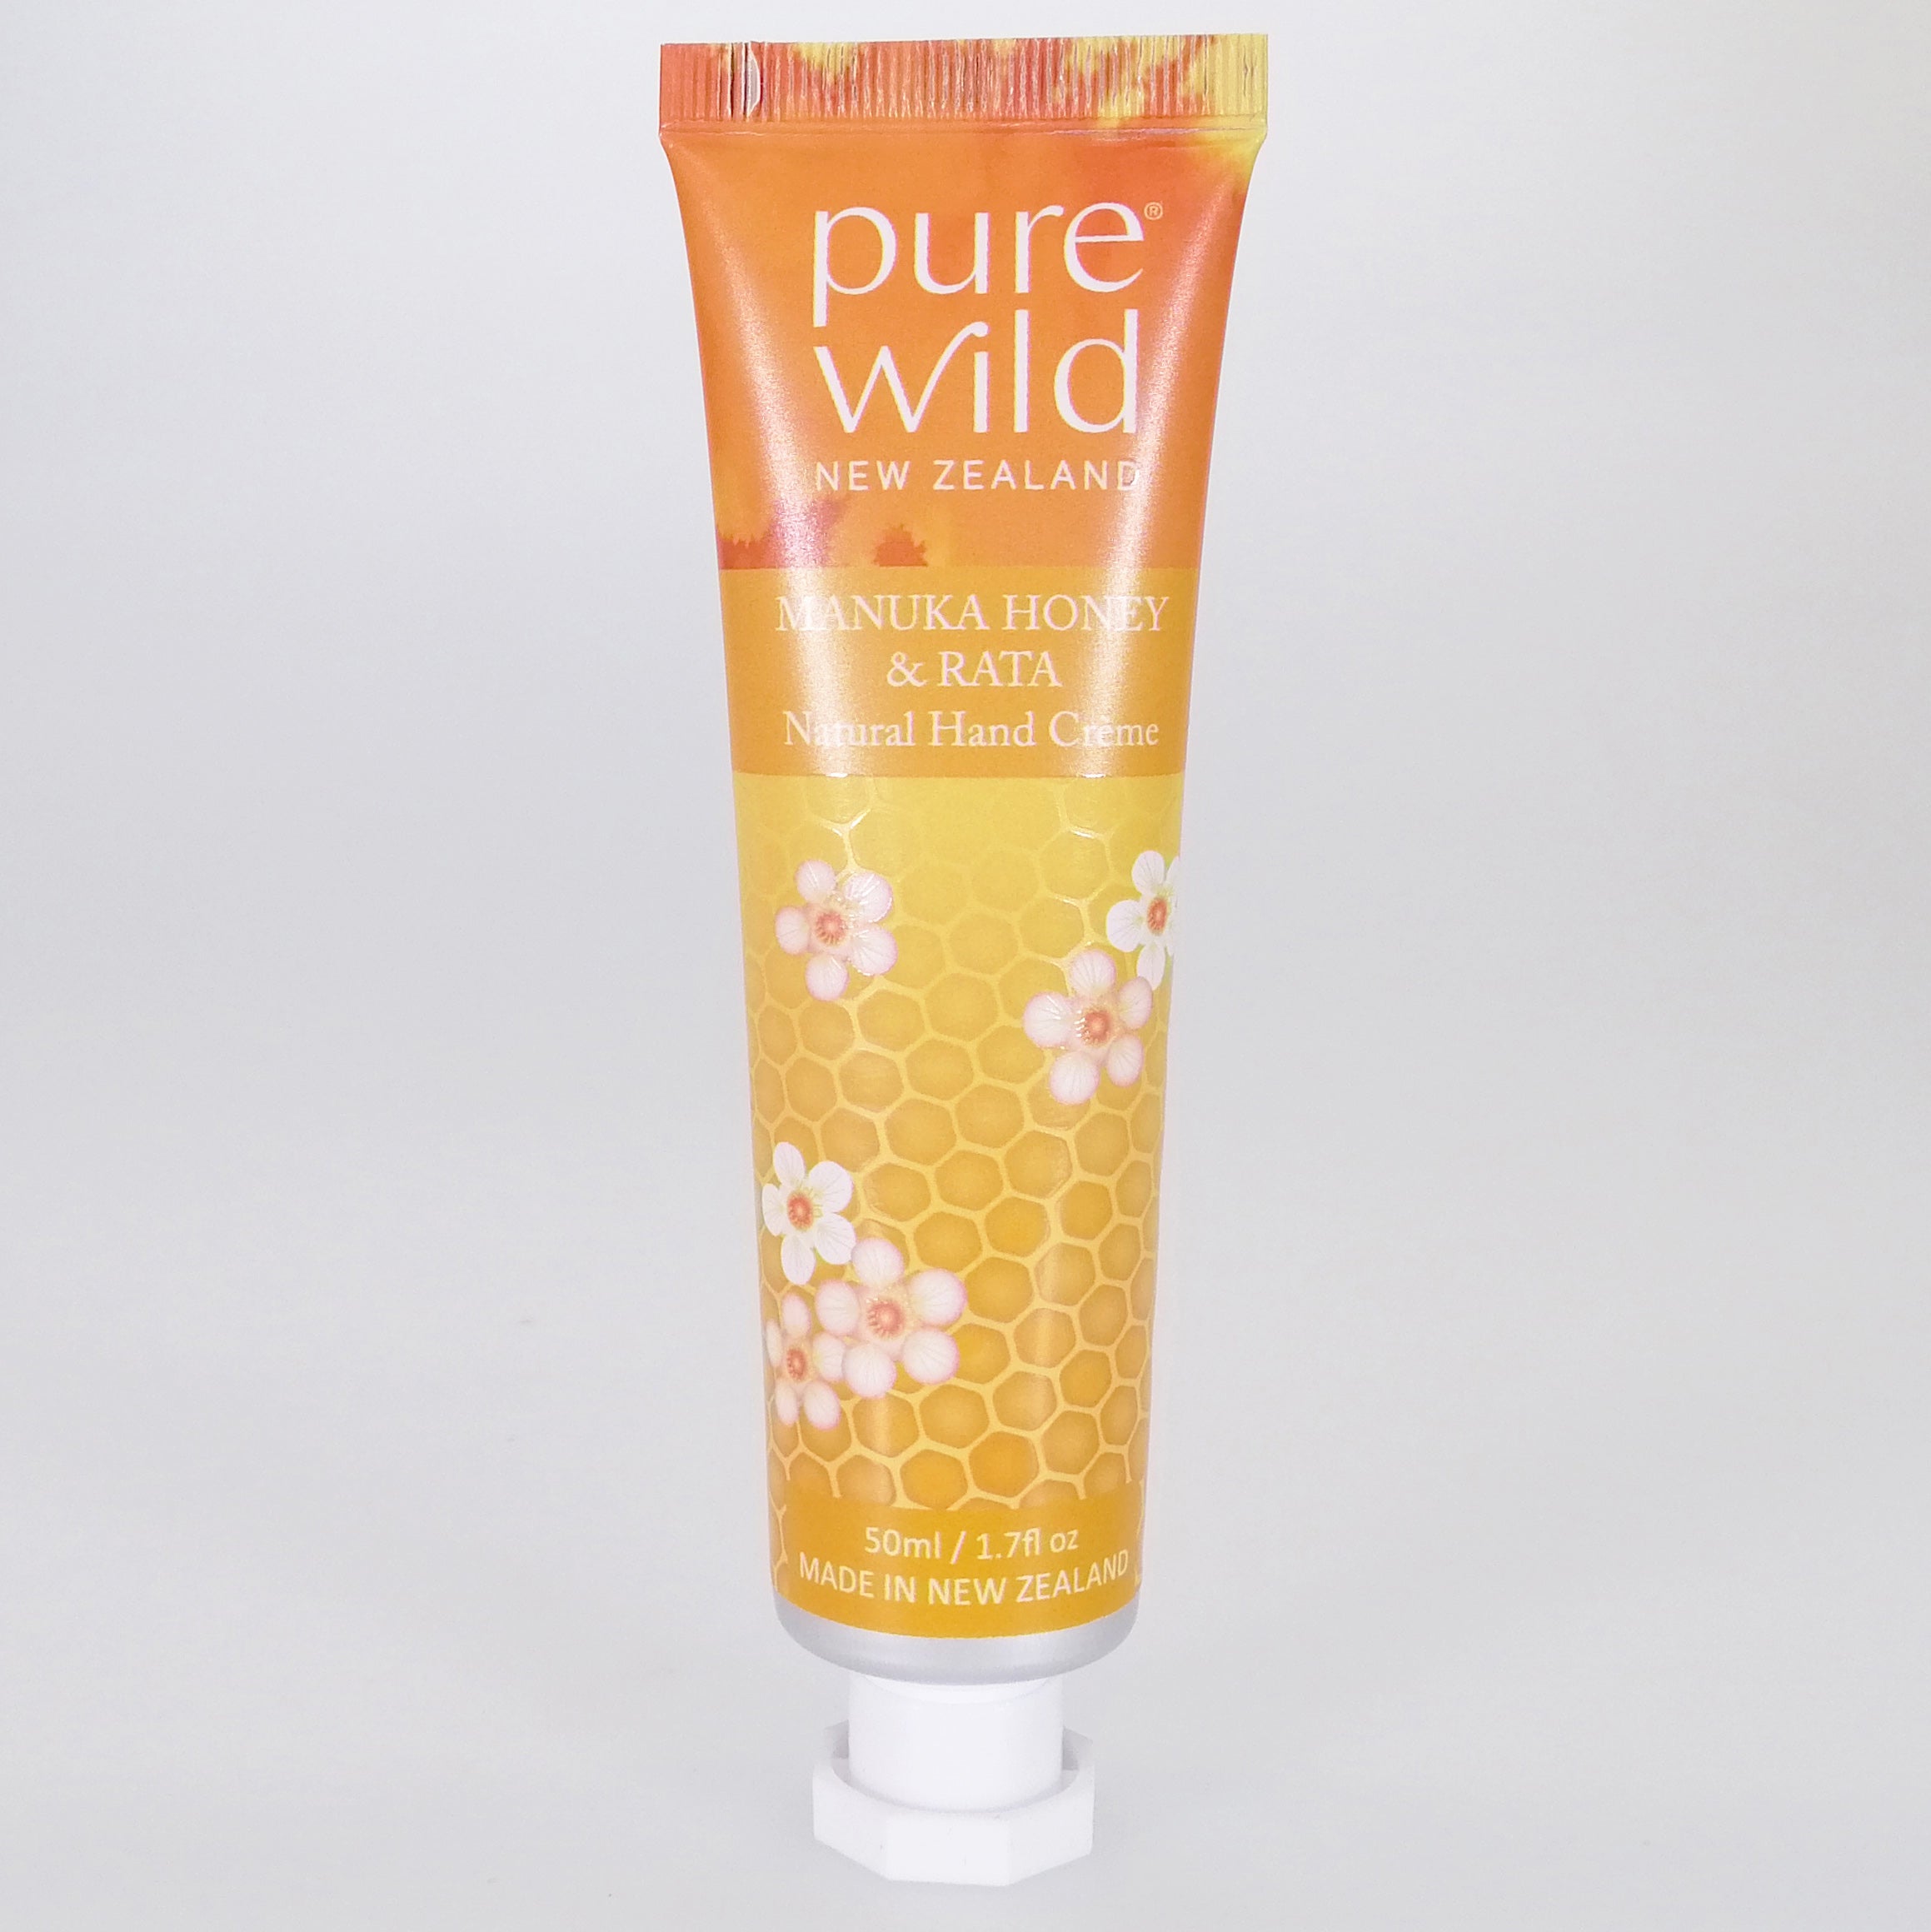 Pure Wild Natural Hand Creme - Manuka Honey & Rata